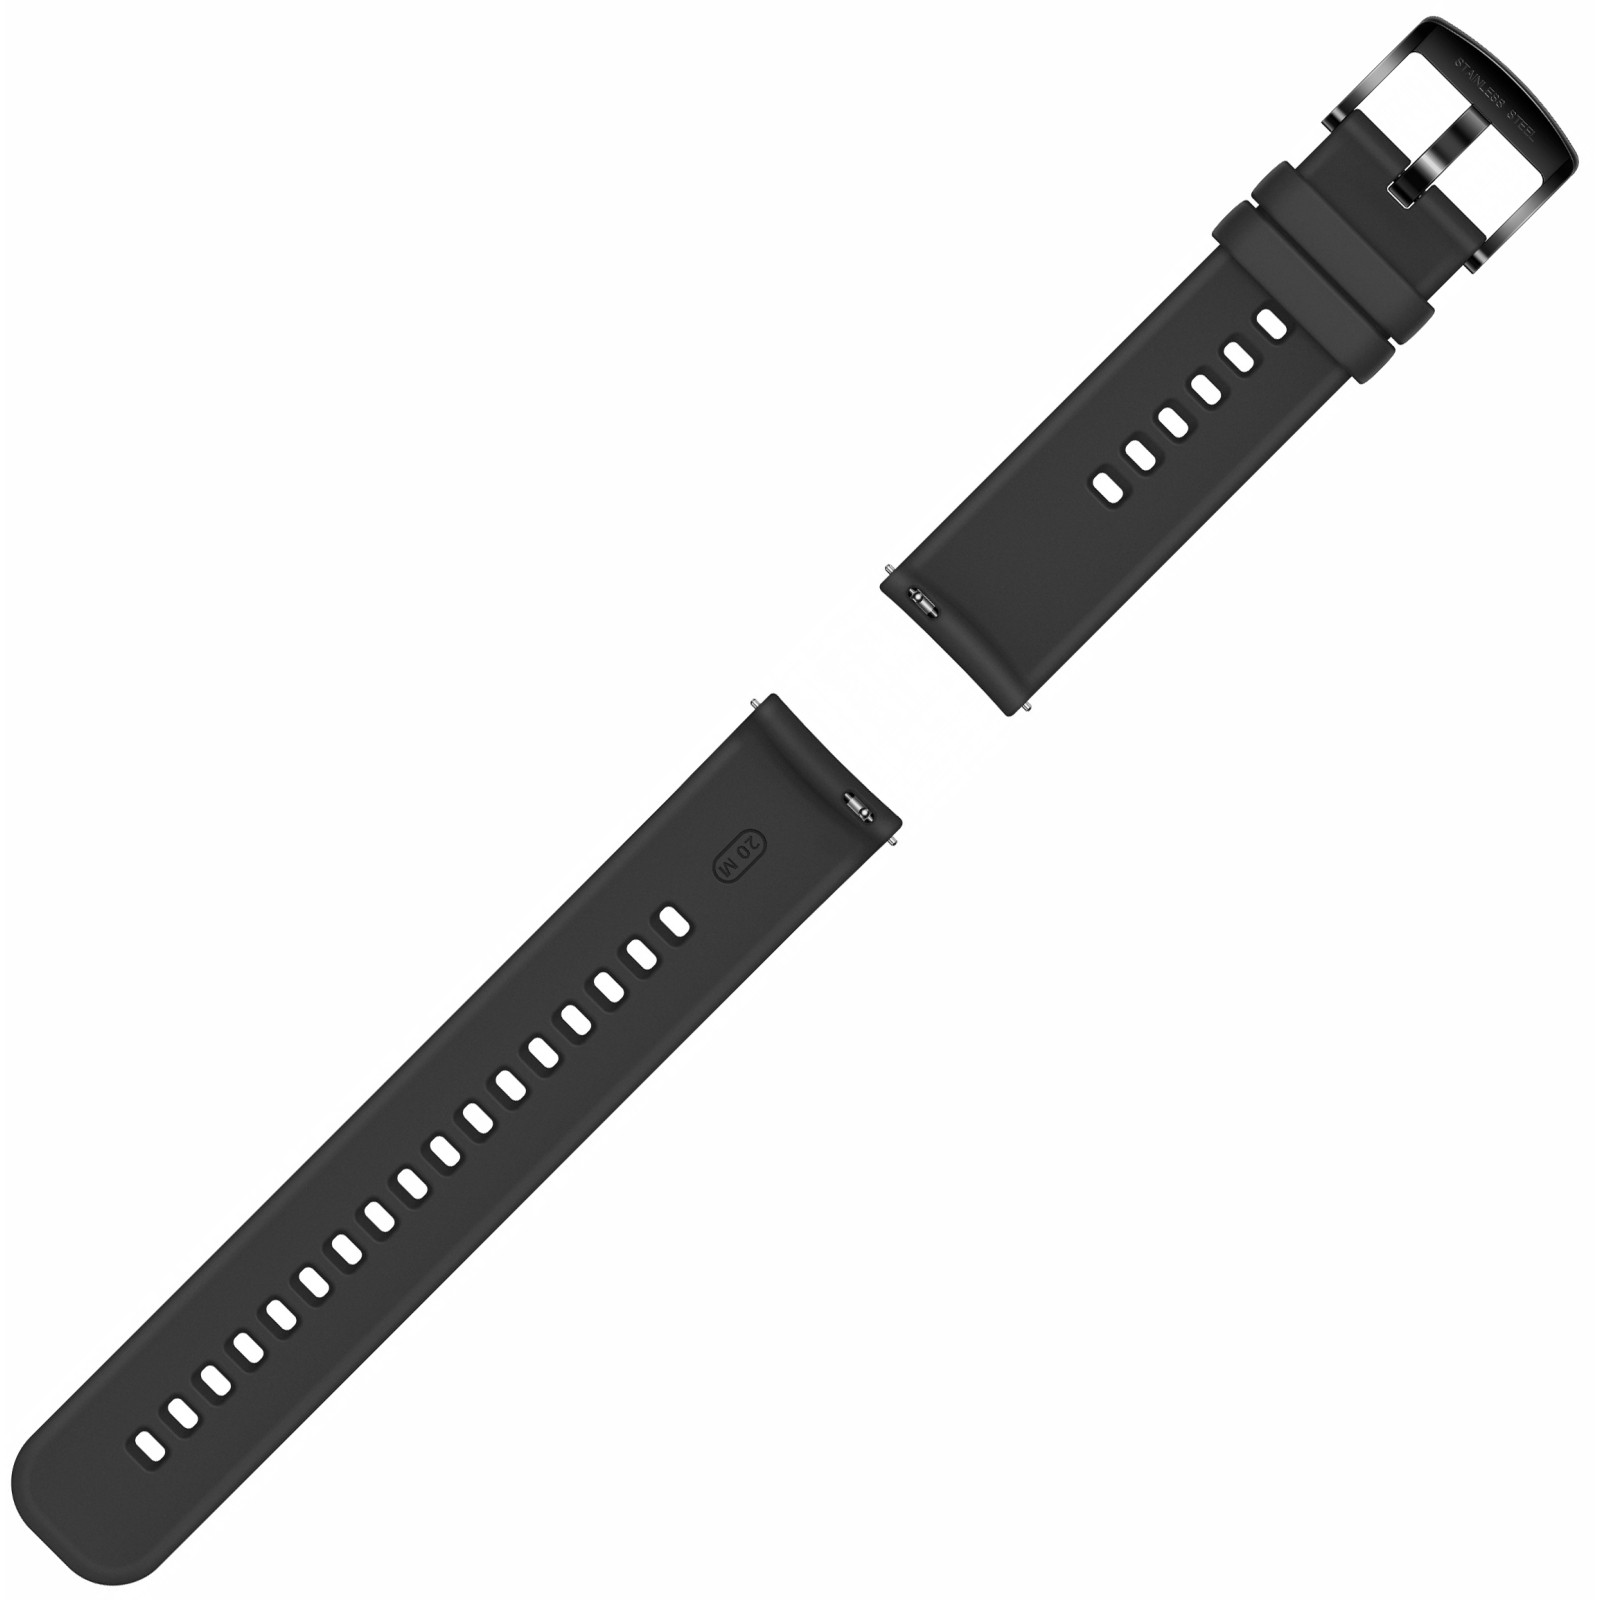 Смарт-часы Huawei Watch GT 2 42mm Night Black Sport Edition (Diana-B19S) SpO2 (55025064) изображение 7